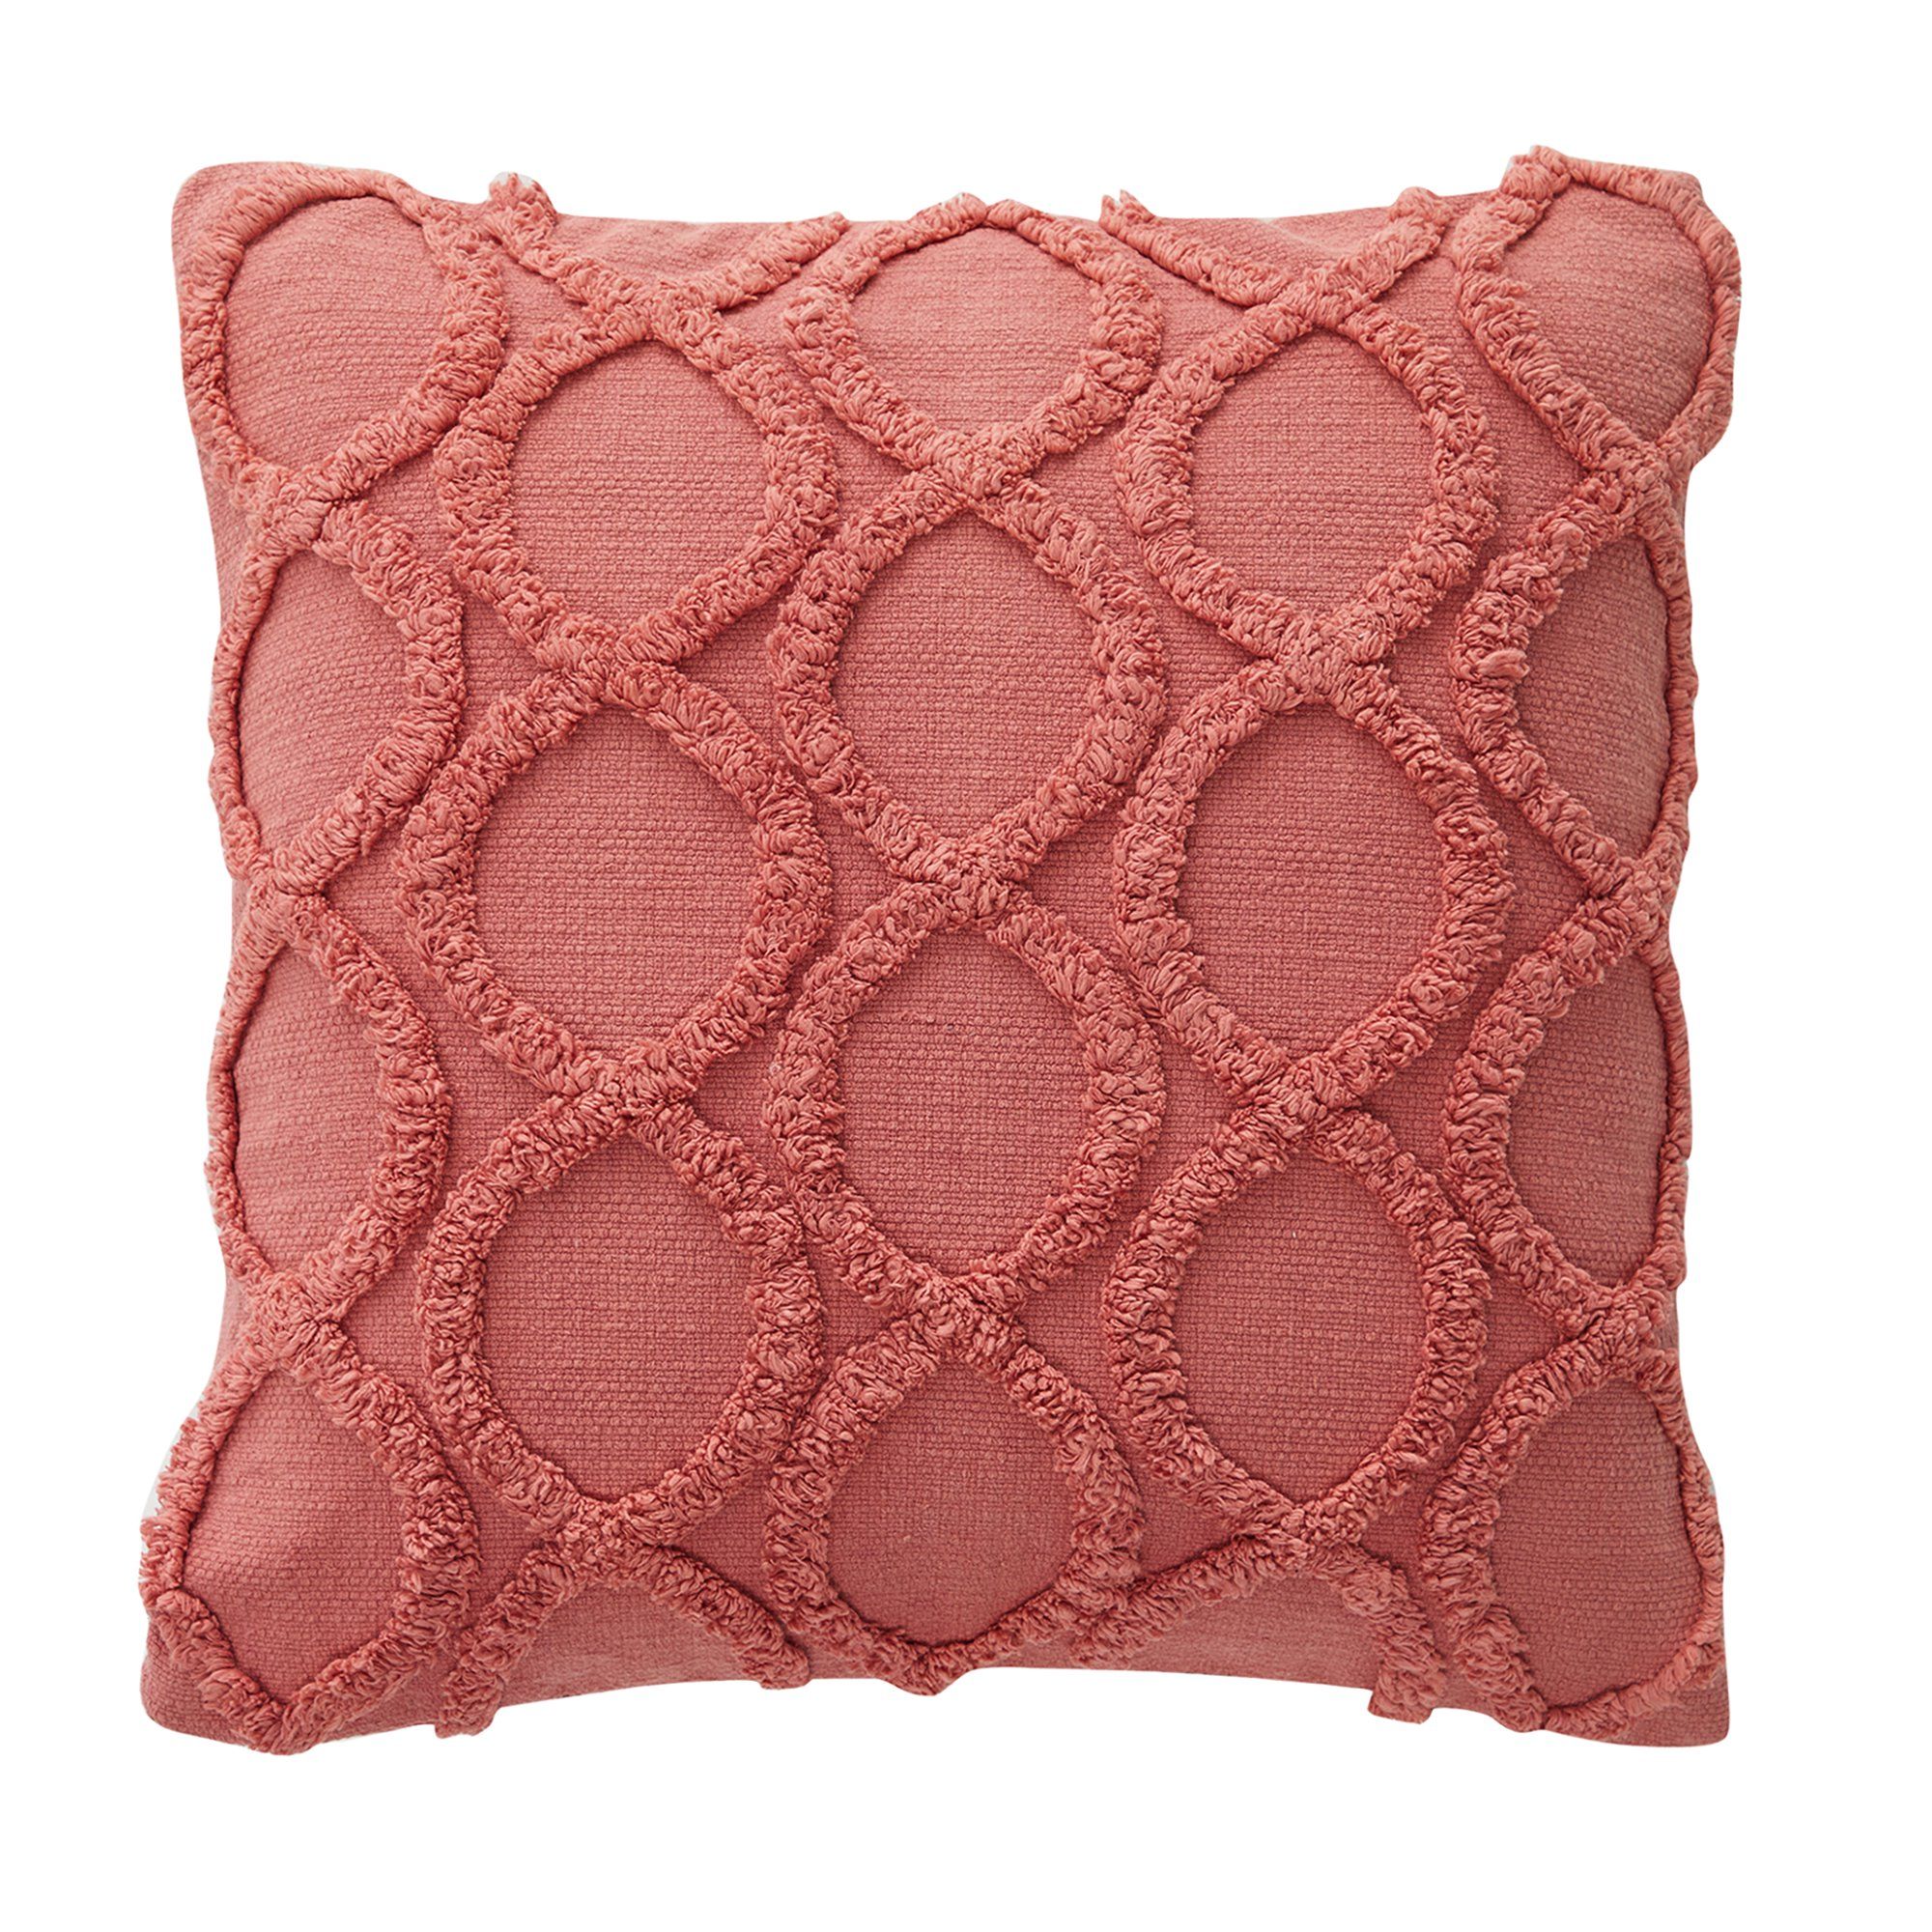 My Texas House Lantana Tufted Cotton Square Decorative Pillow Cover, 20" x 20", Terracotta | Walmart (US)